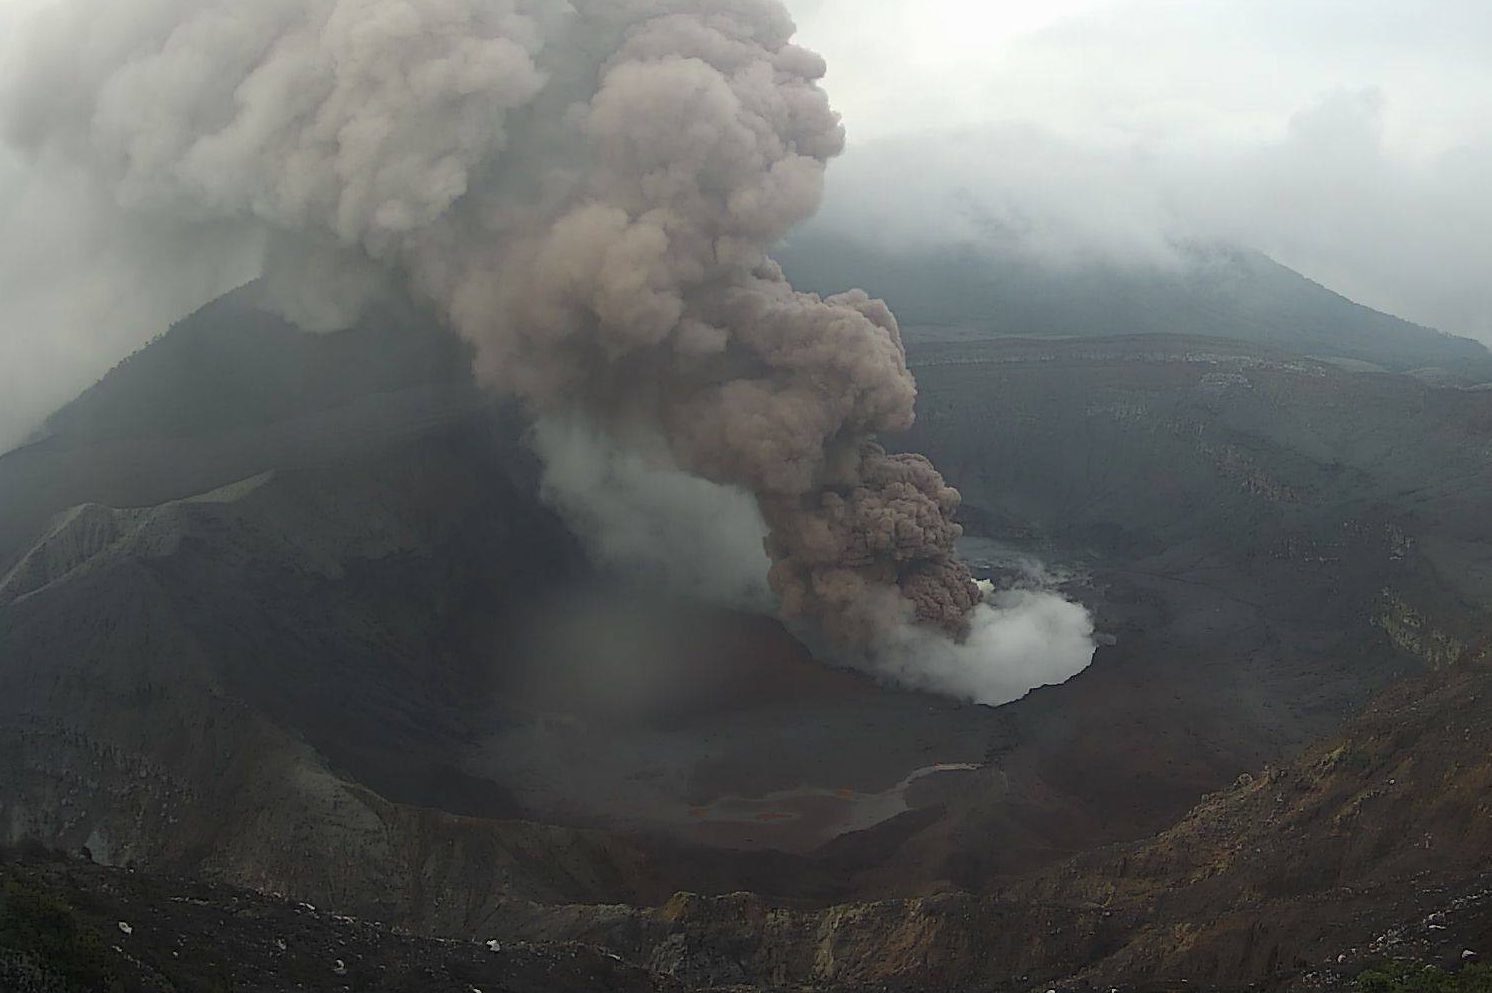 June 2 Poas Volcano activity.